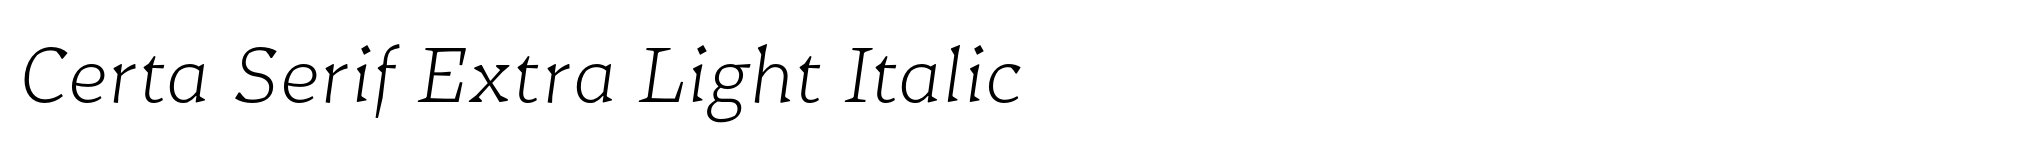 Certa Serif Extra Light Italic image